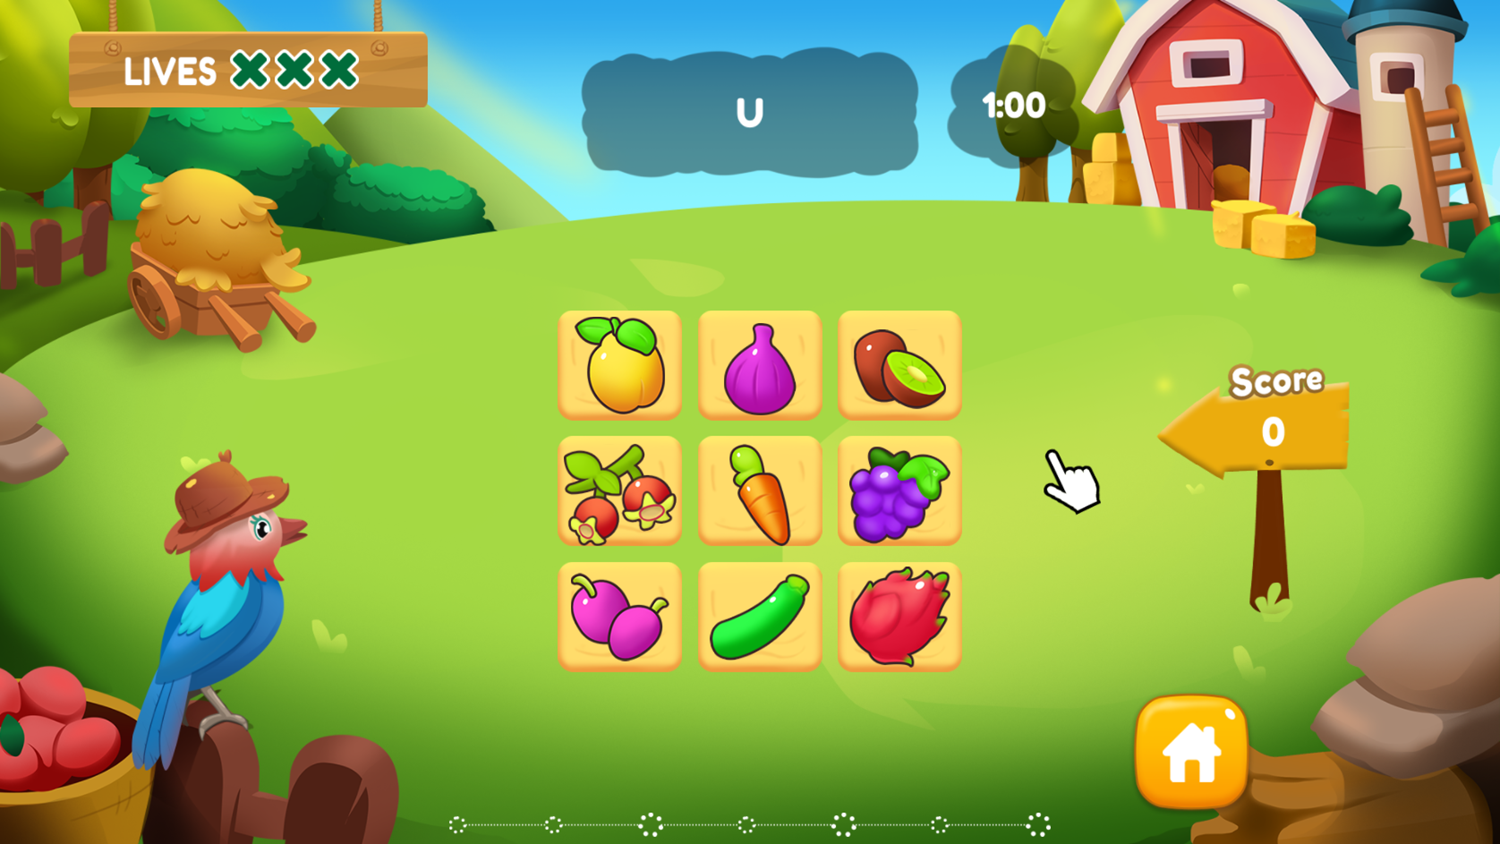 The Farm Land Game Level Start Screenshot.